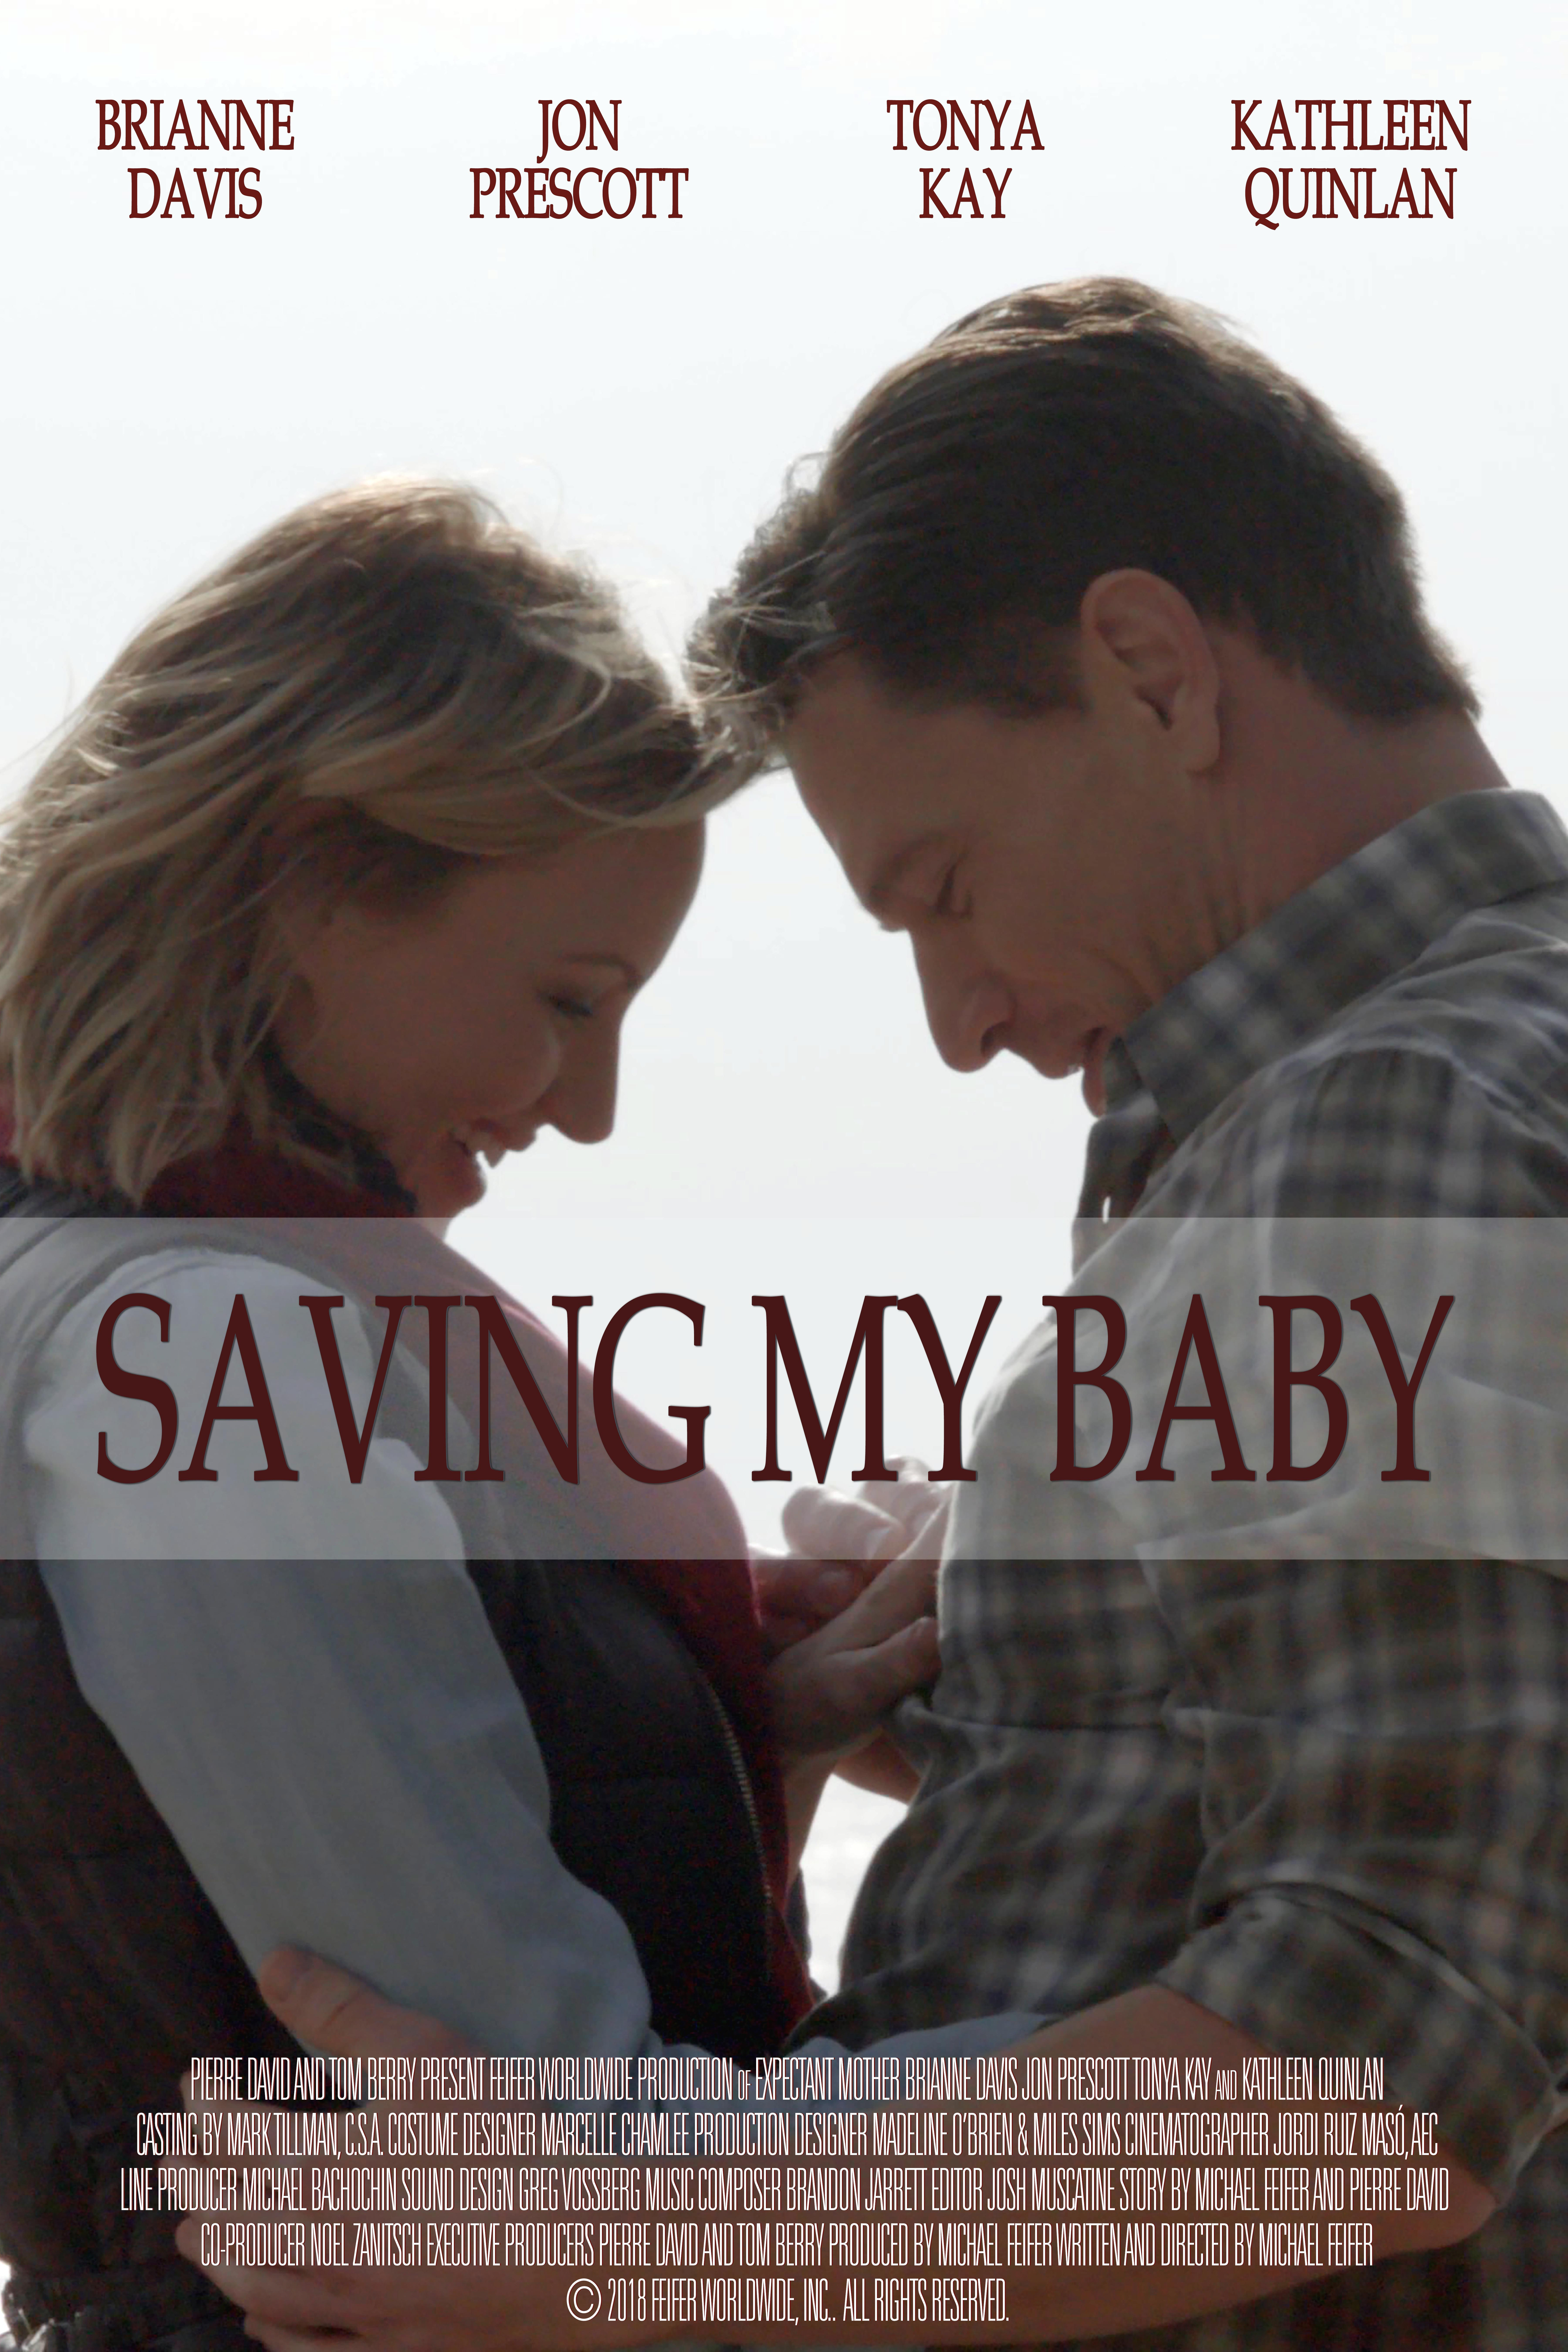 Nonton film Saving My Baby layarkaca21 indoxx1 ganool online streaming terbaru